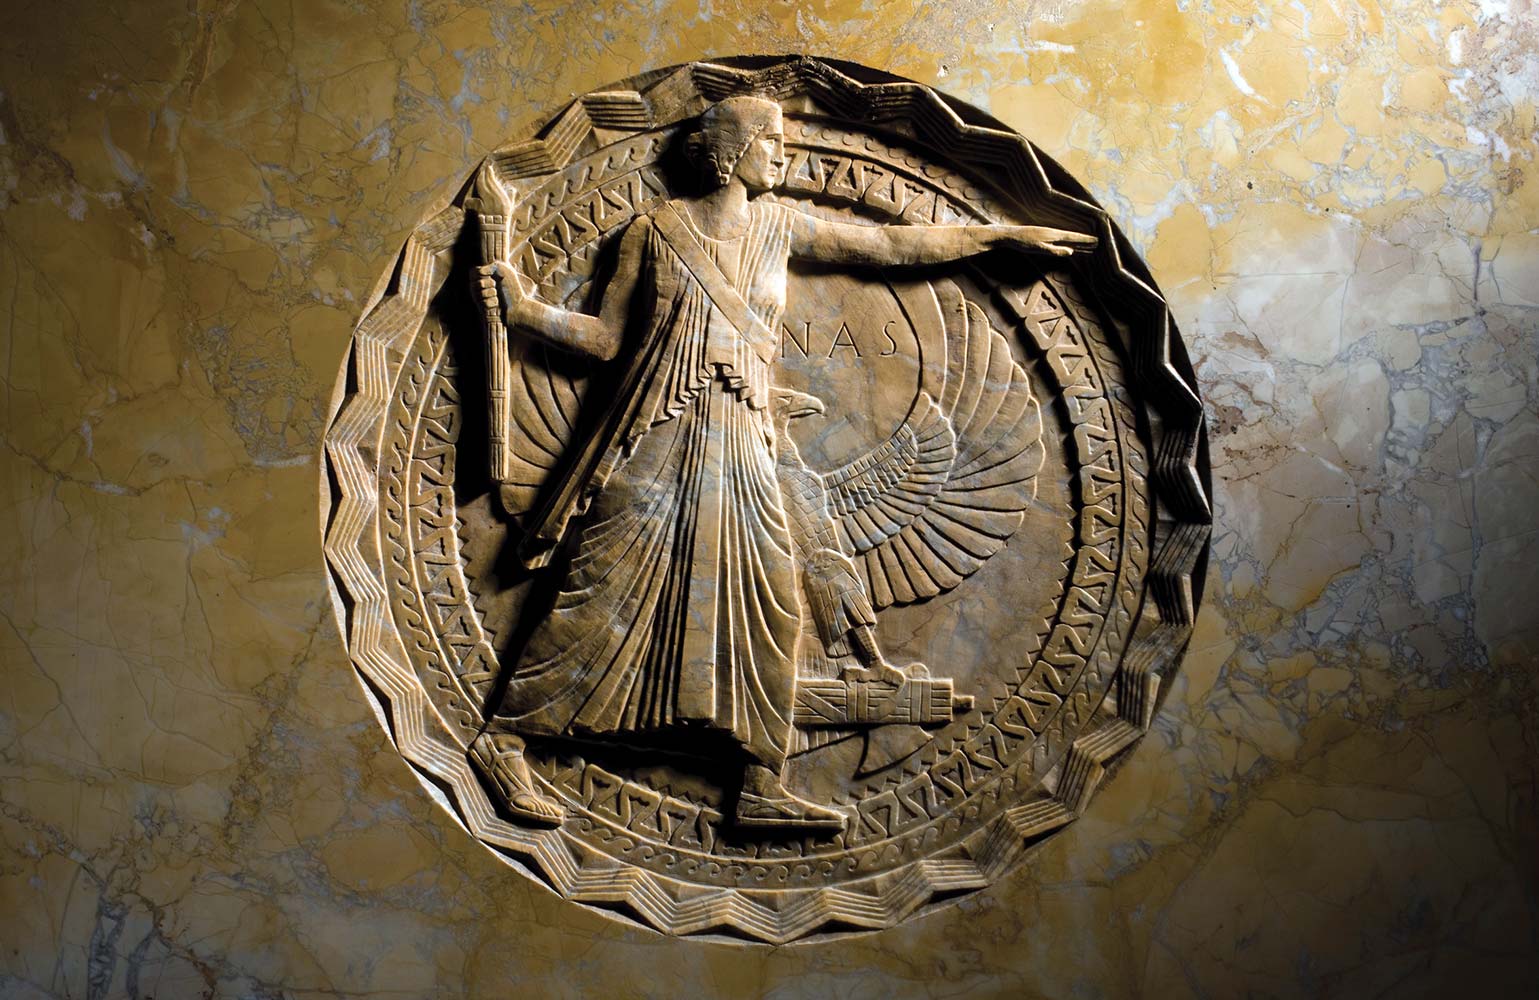 Sculpture of the NAS Seal in bronze